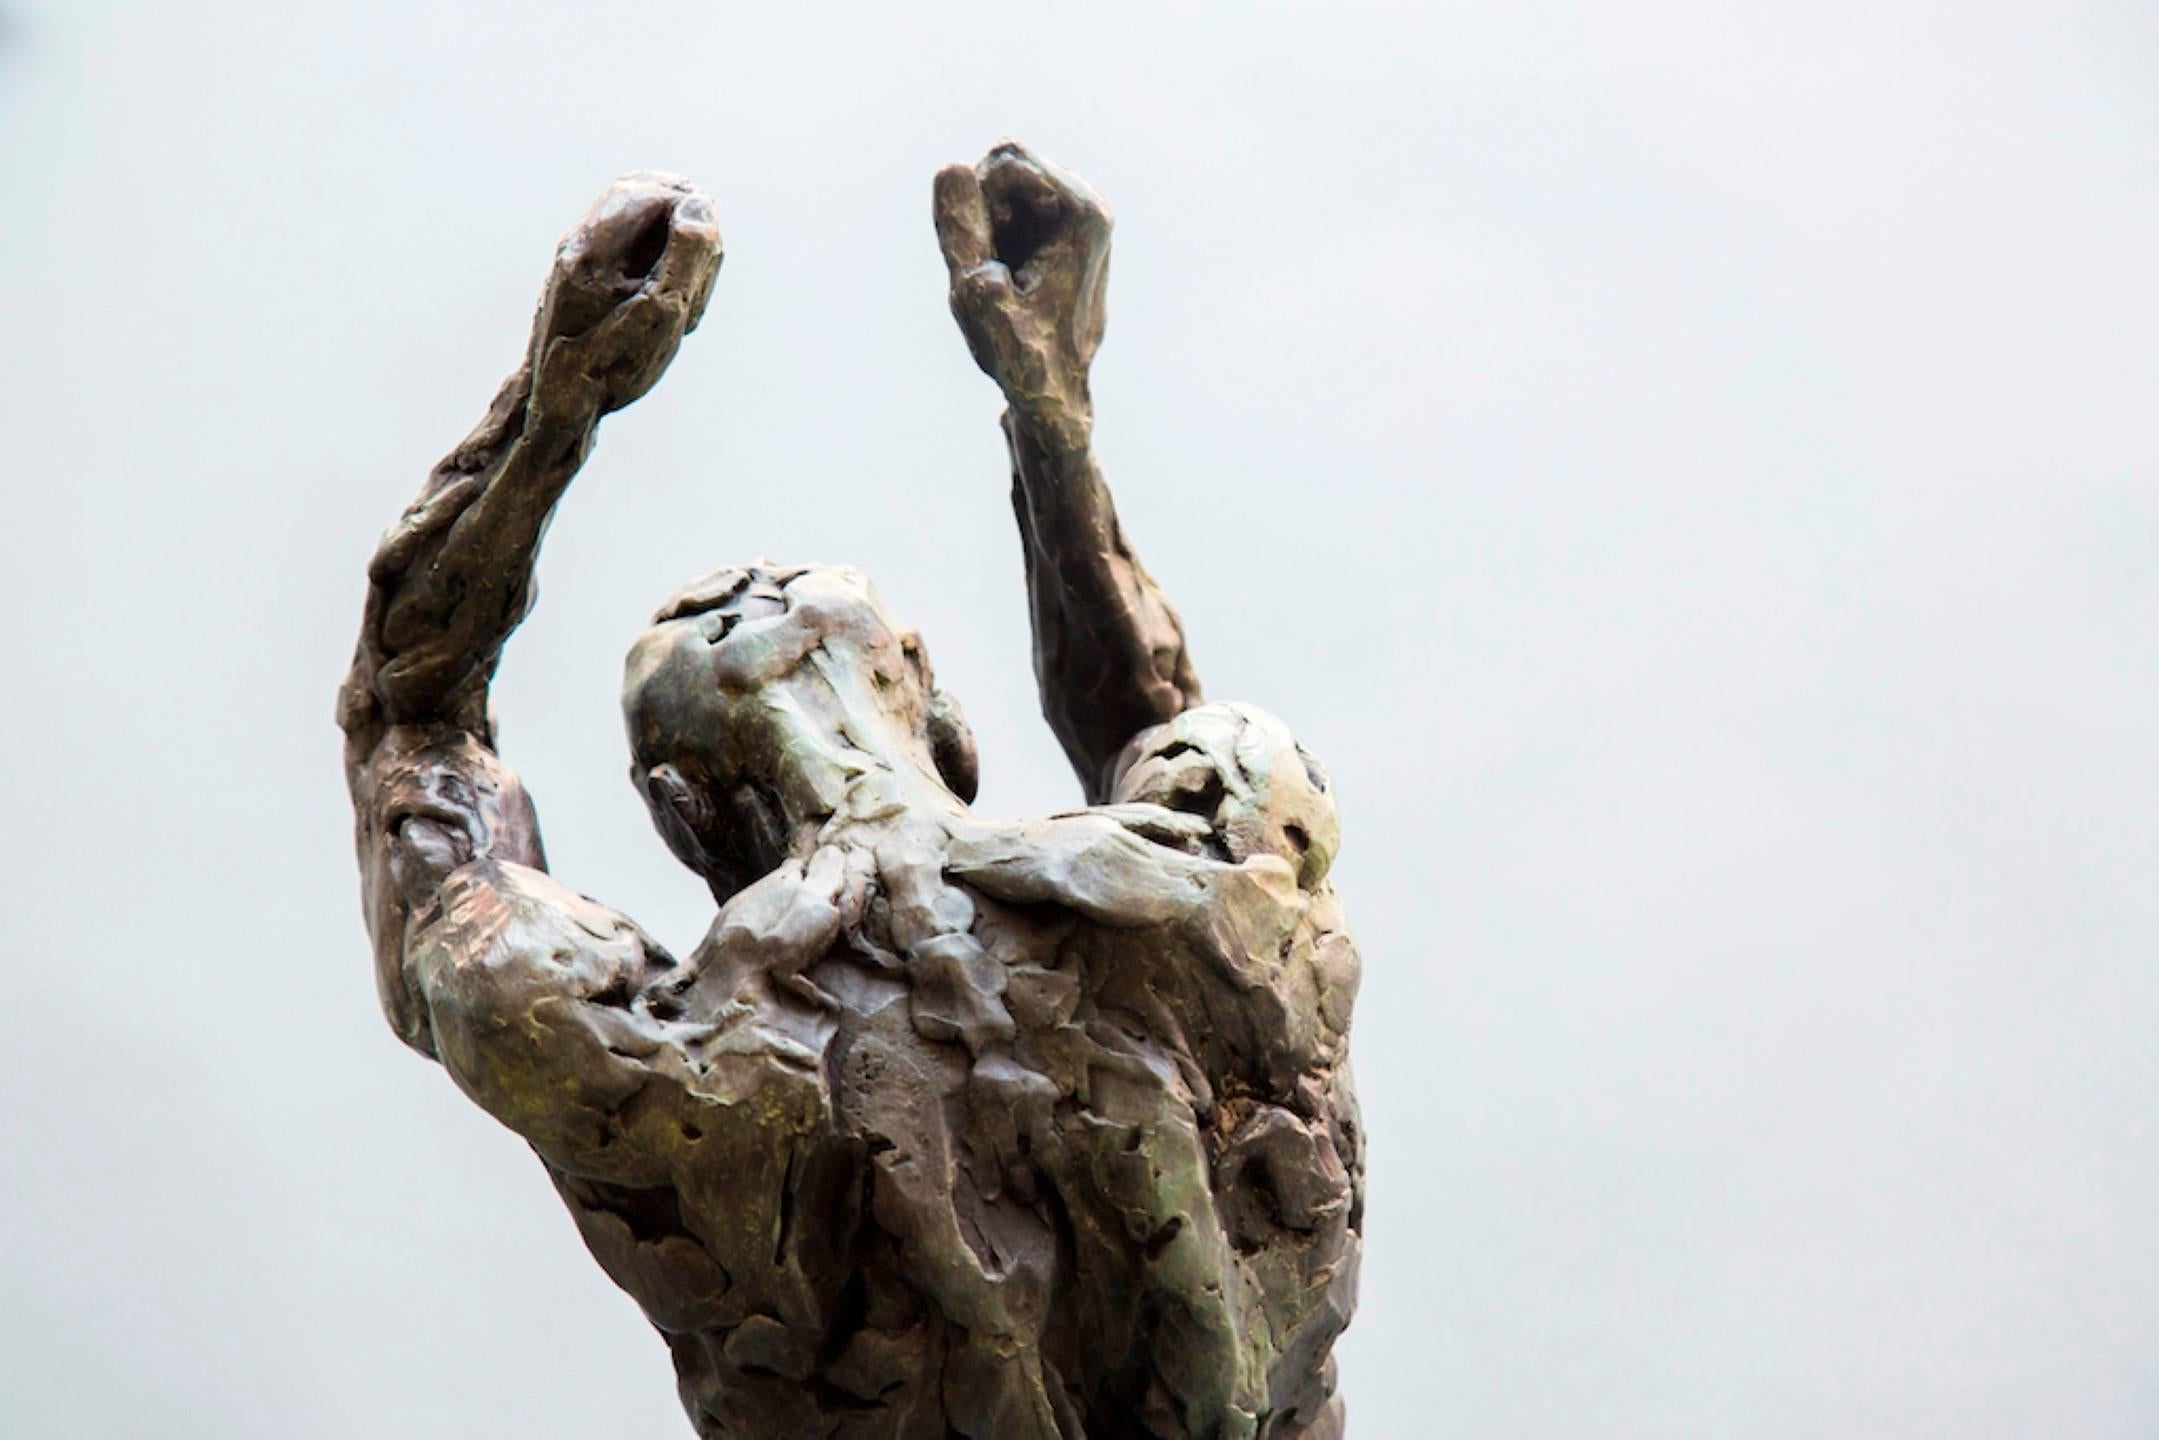 Orpheus after the disappearance of Eurydice - male, figurative, bronze sculpture - Sculpture by Richard Tosczak